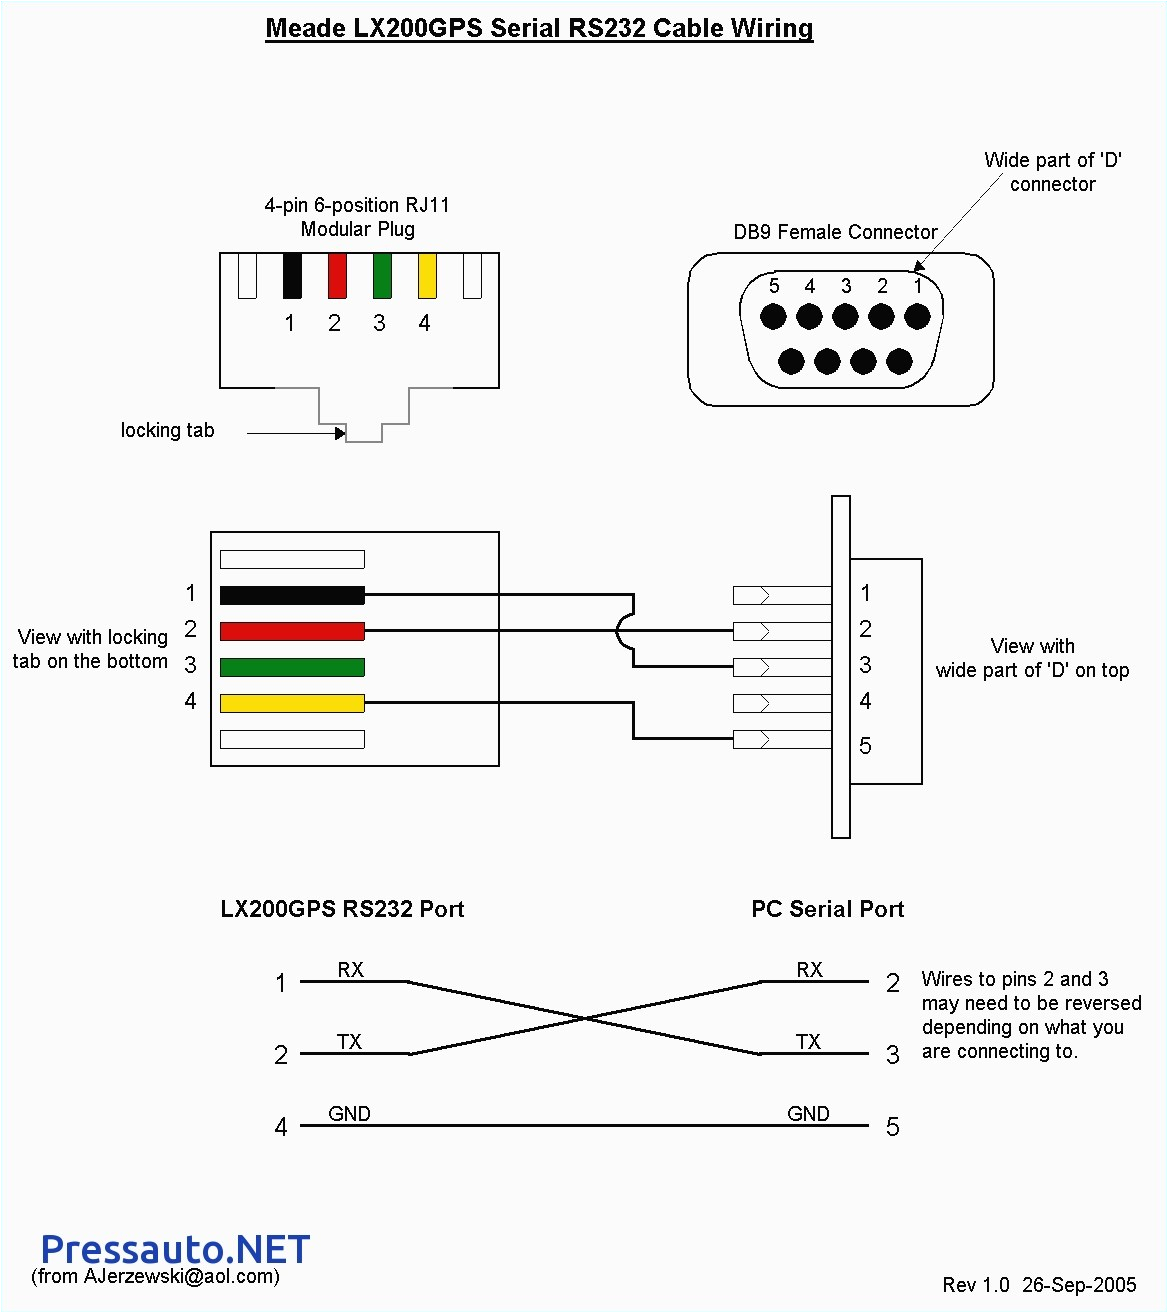 rj12 pinout diagram wires wiring diagram toolbox rj12 wiring diagram wires just wiring diagram rj12 pinout